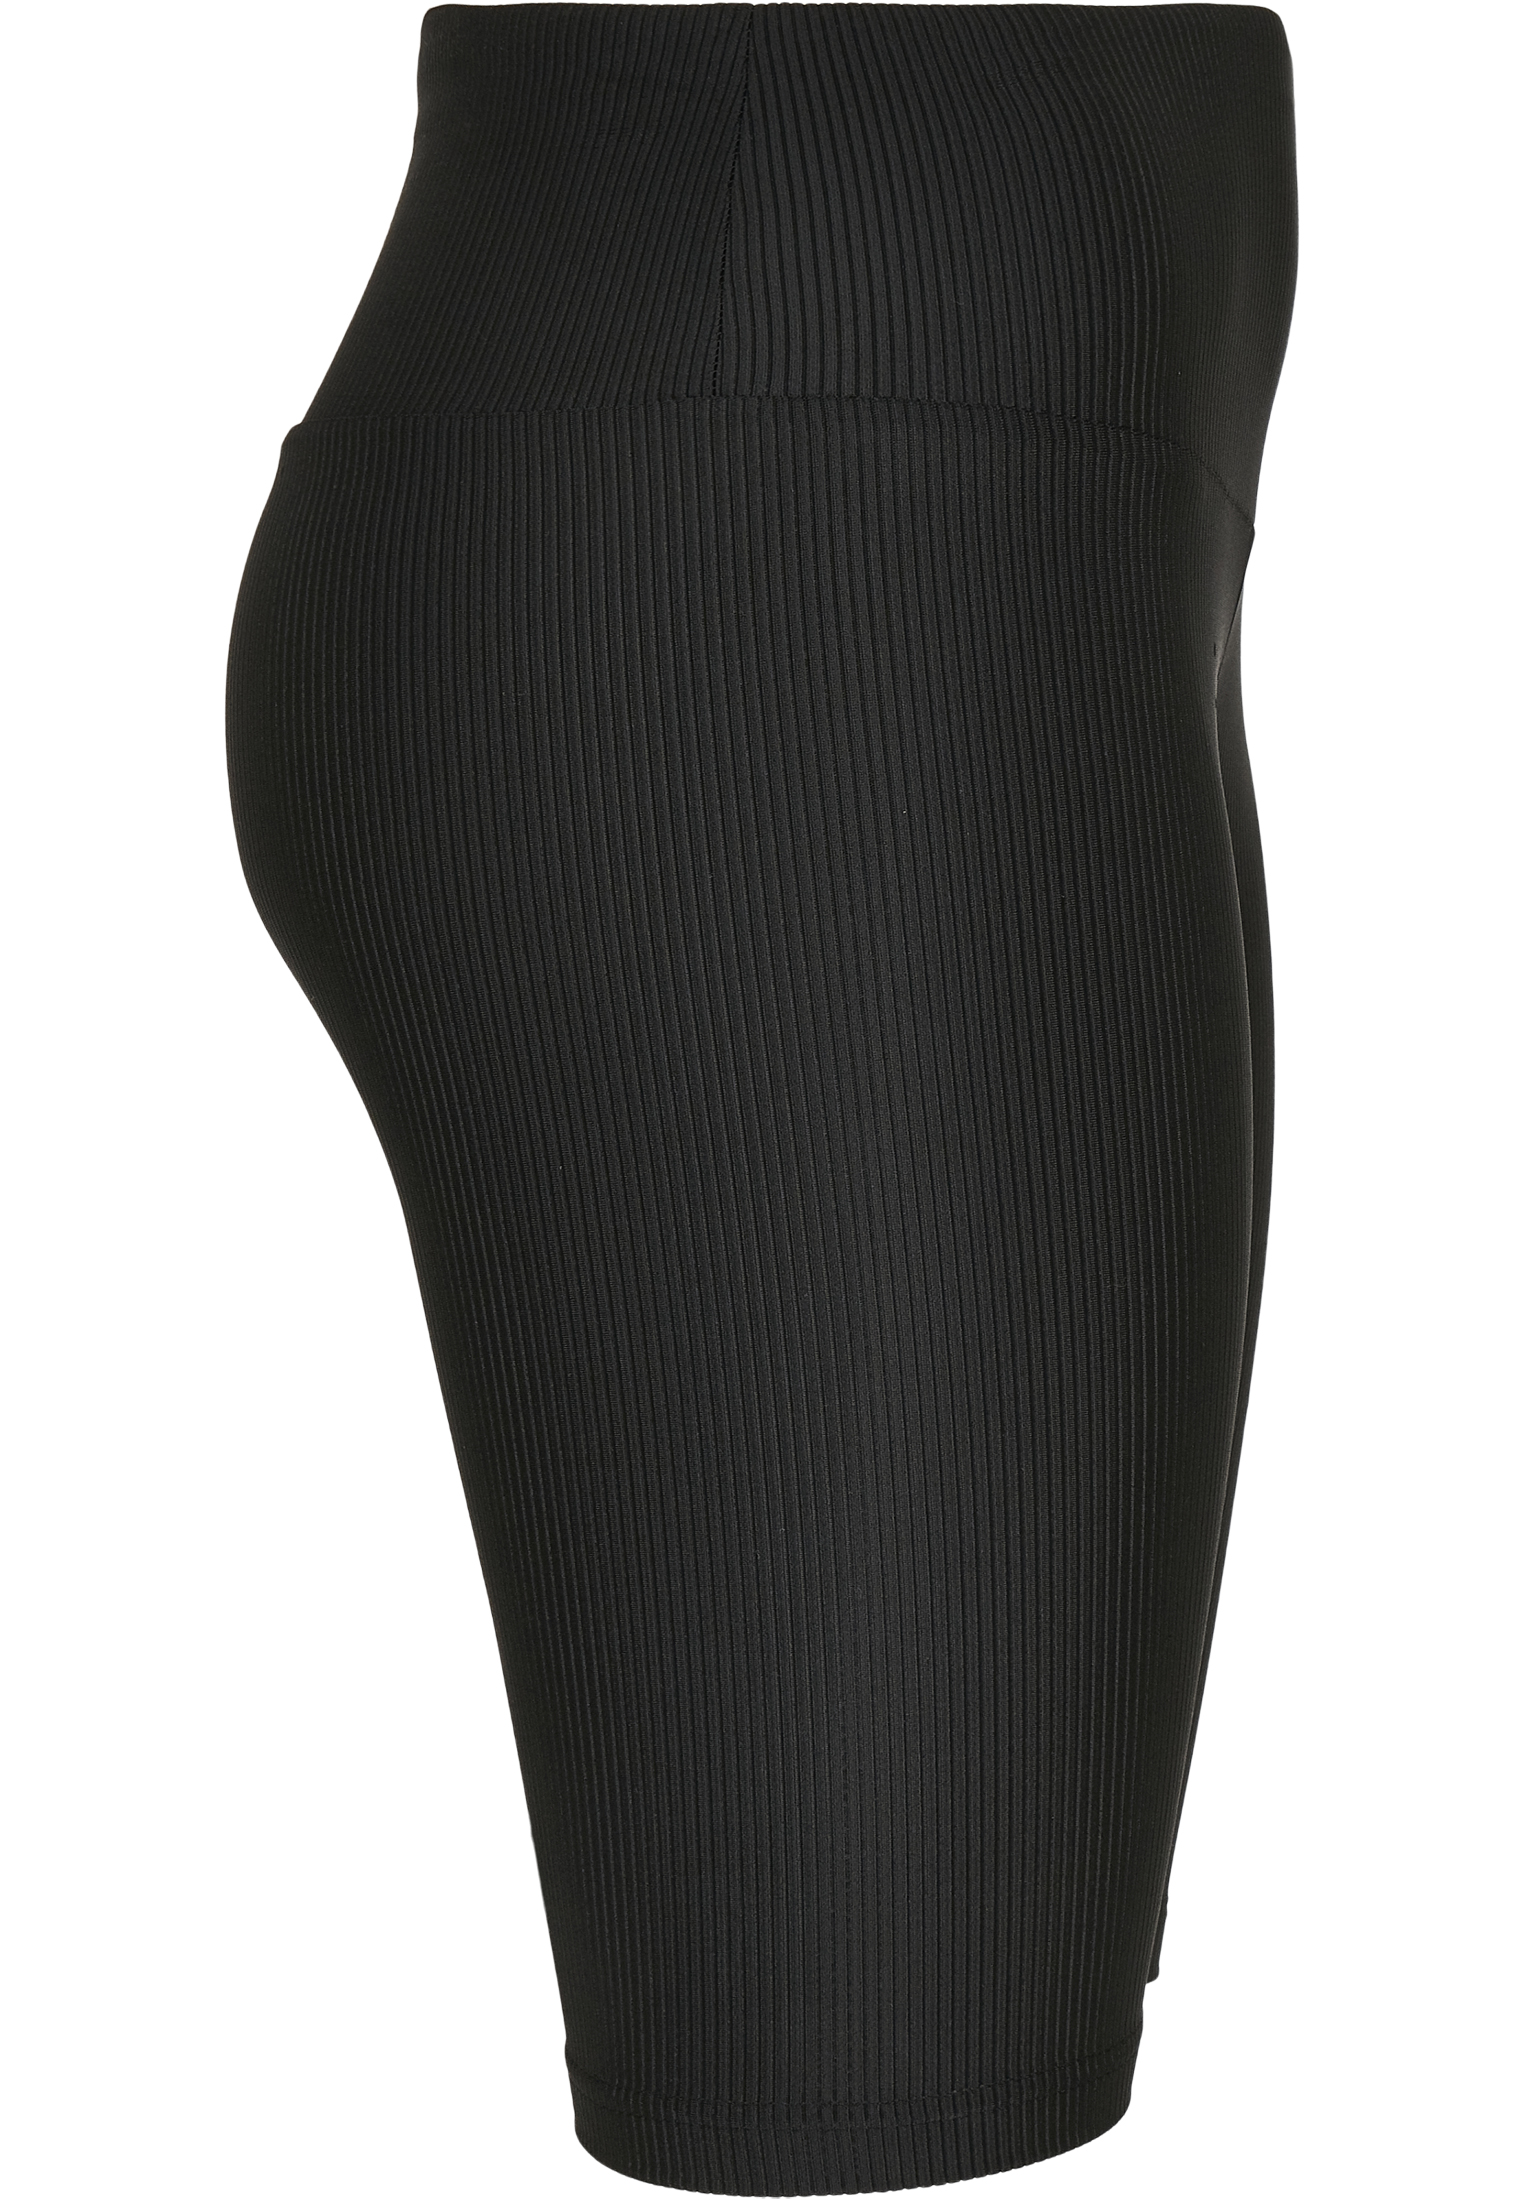  Ladies High Waist Shiny Rib Cycle Shorts in Farbe black